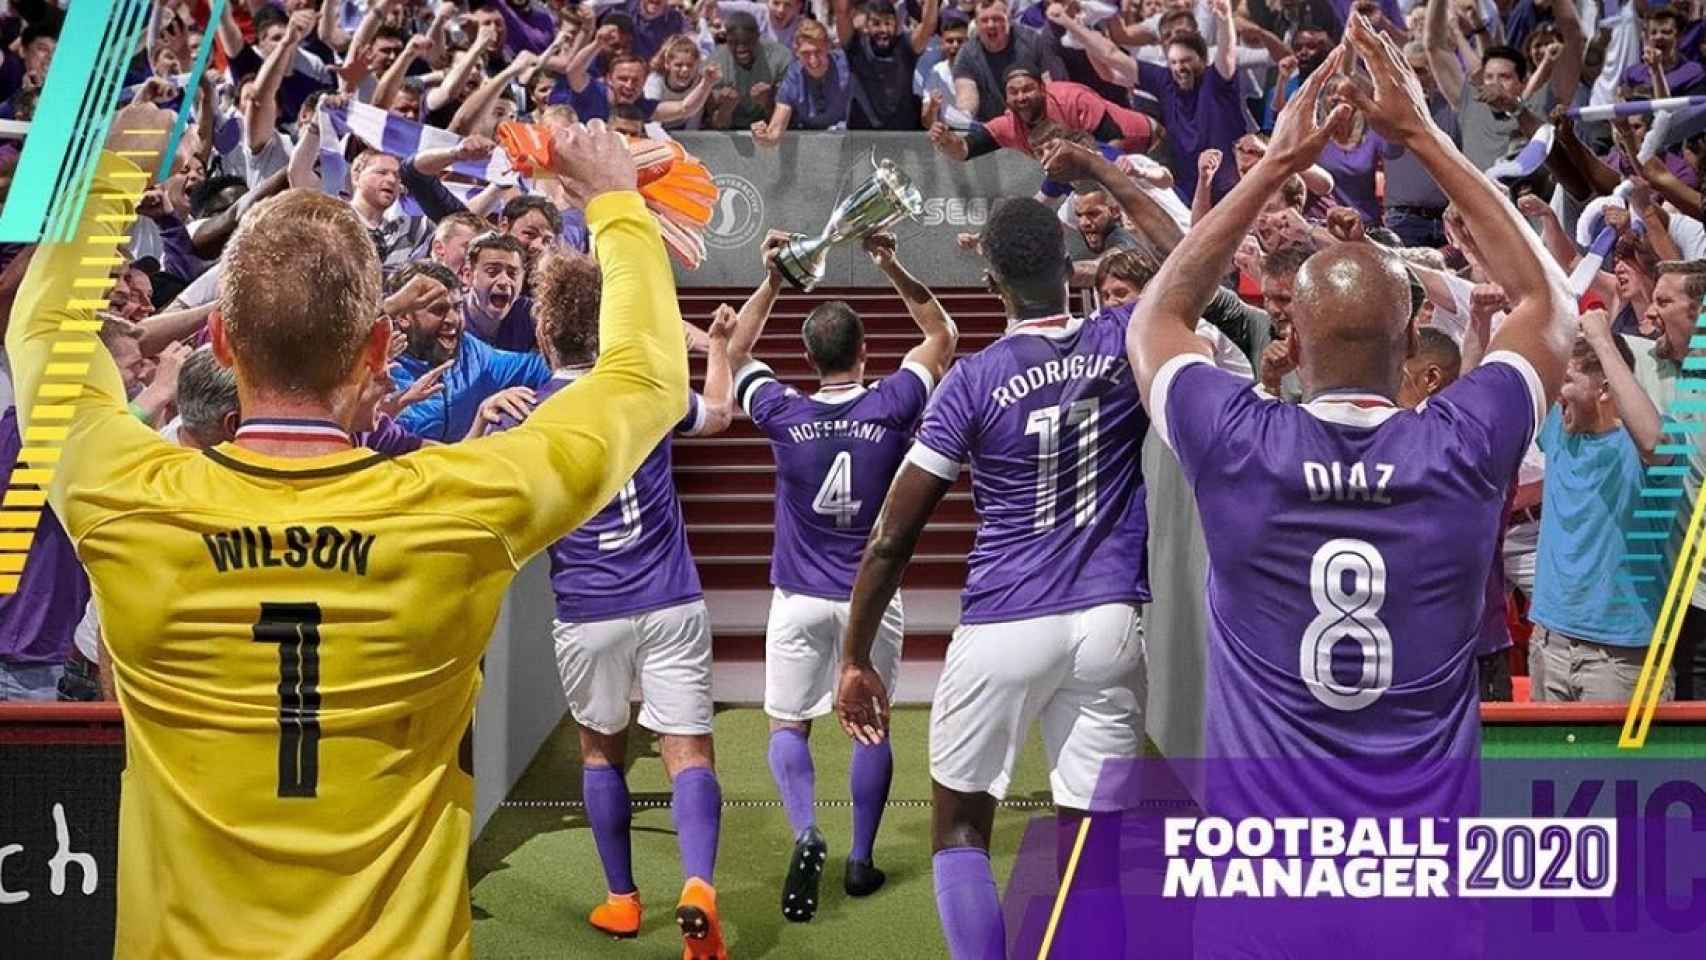 Football Manager 2020 ya disponible en la Play Store